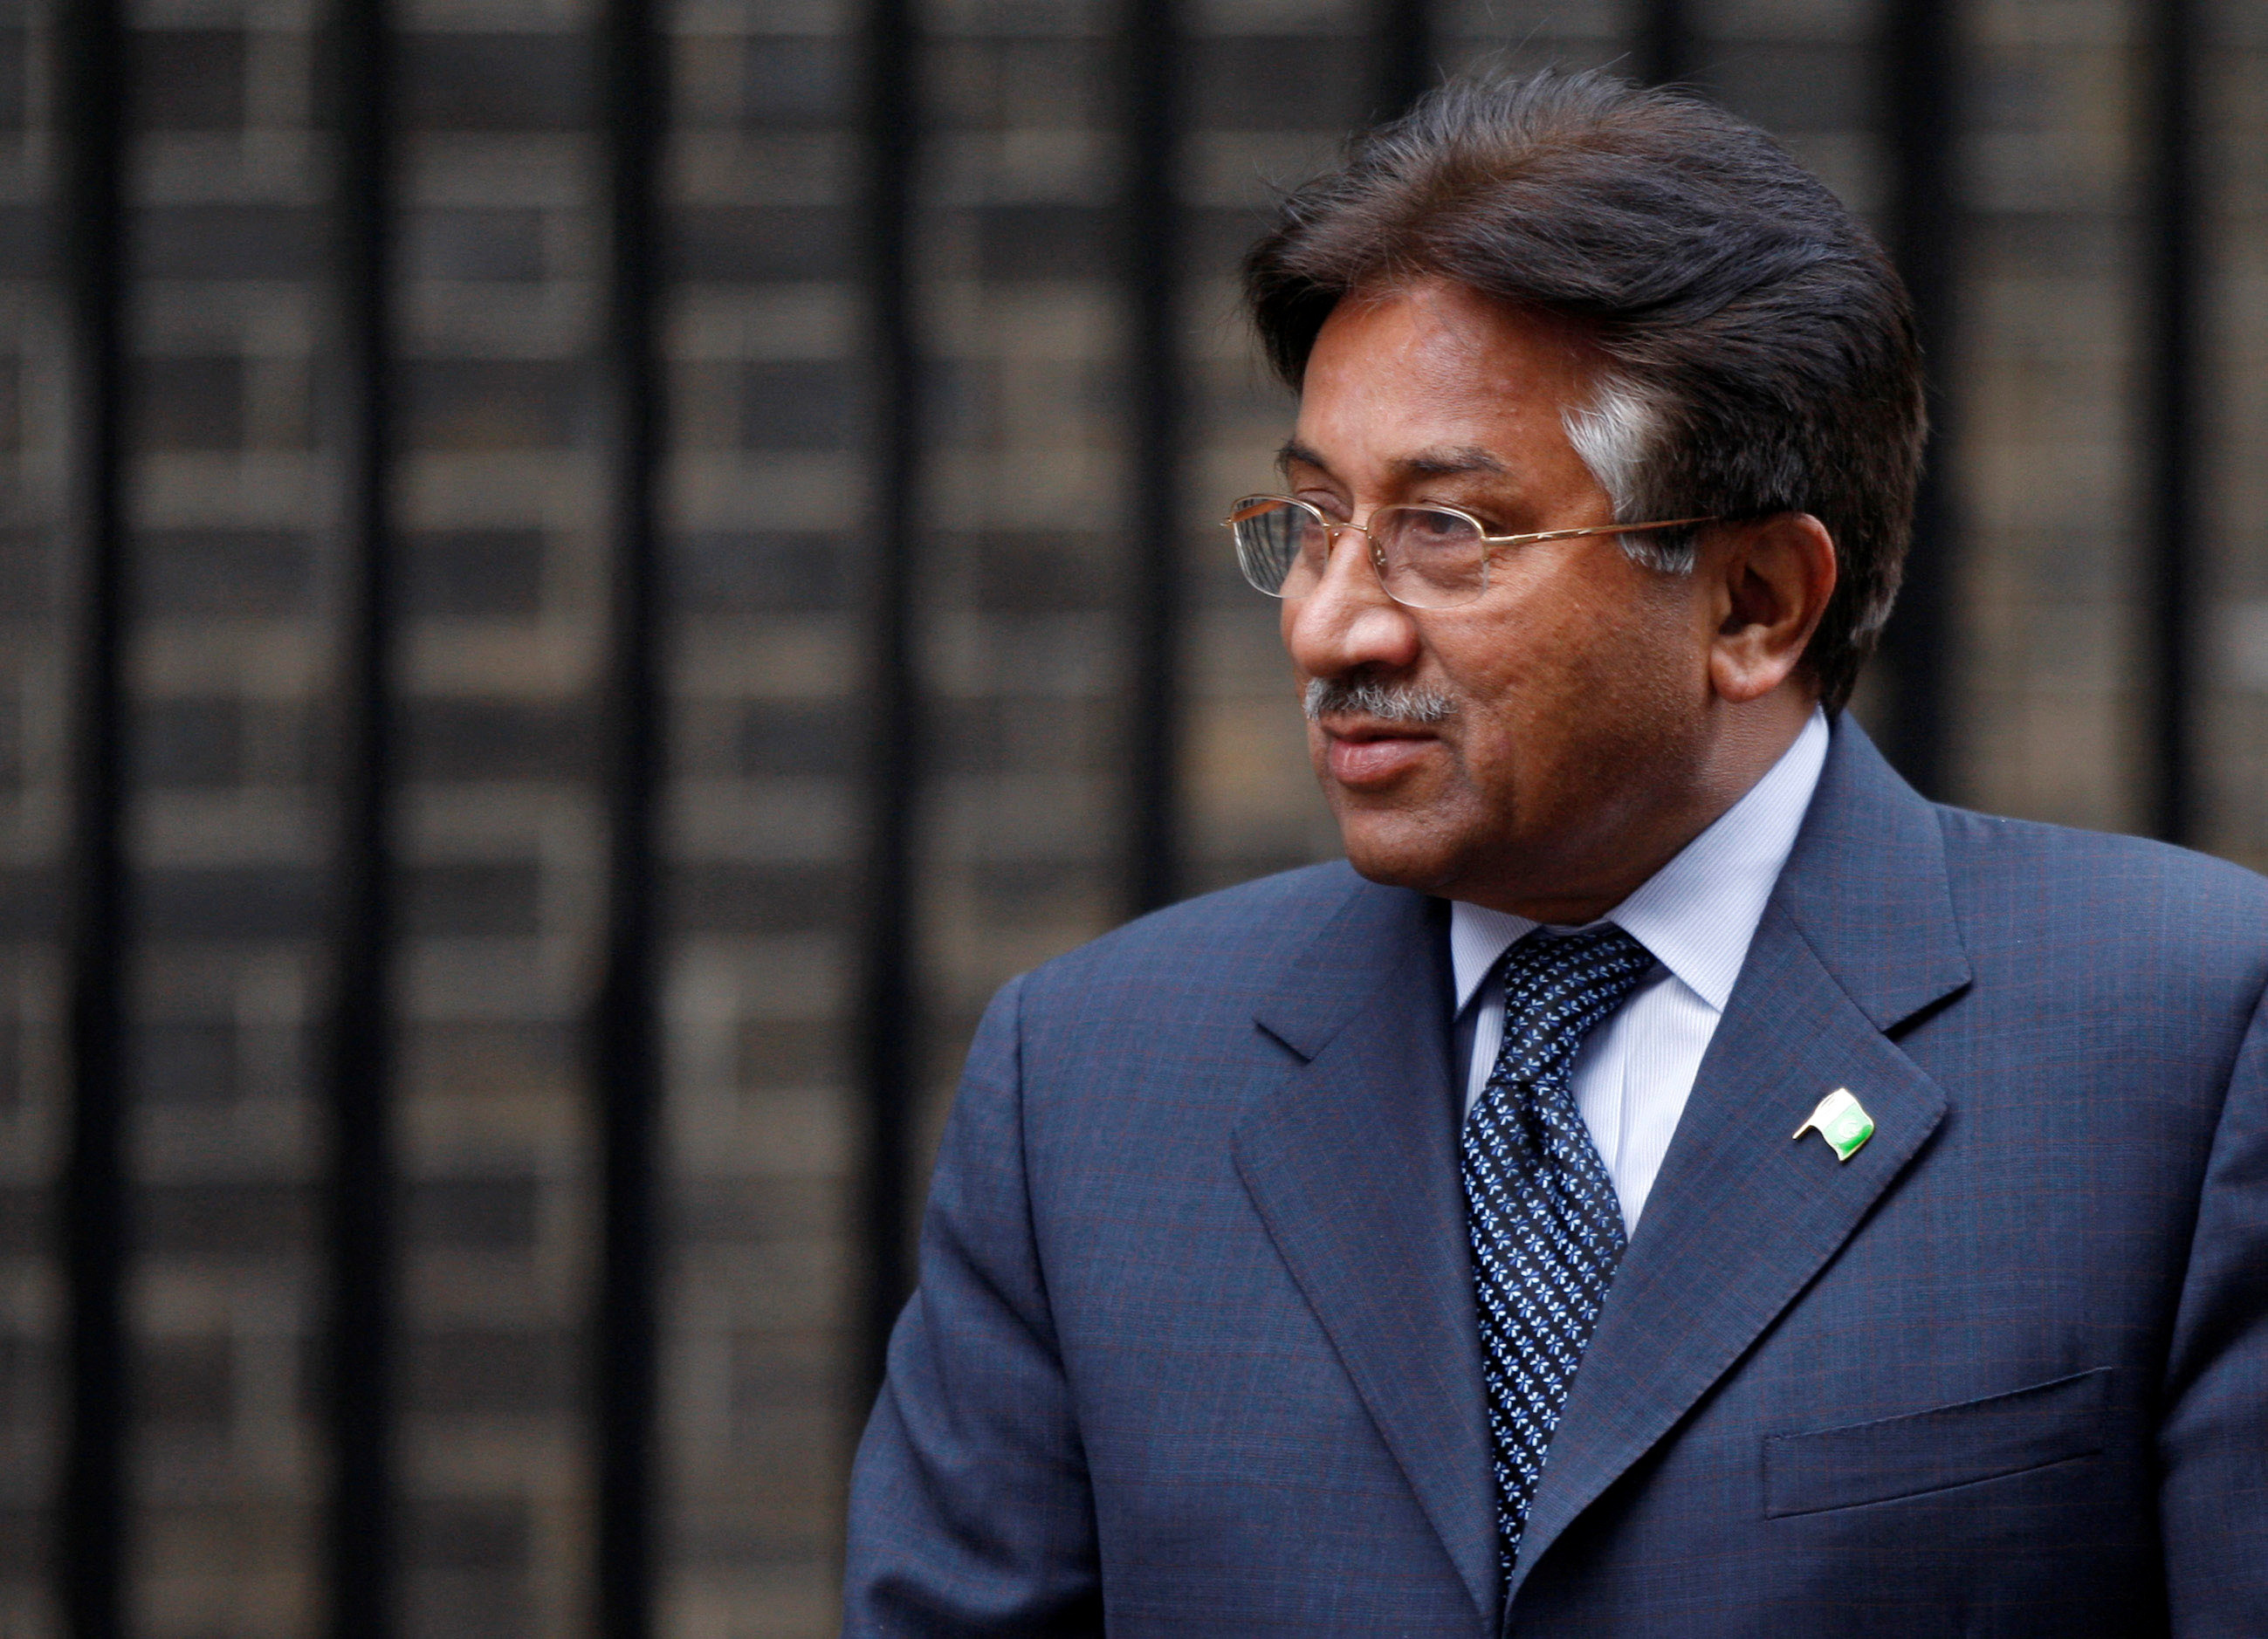 Pakistan's President Musharraf arrives to meet Britain's Prime Minister Brown in London